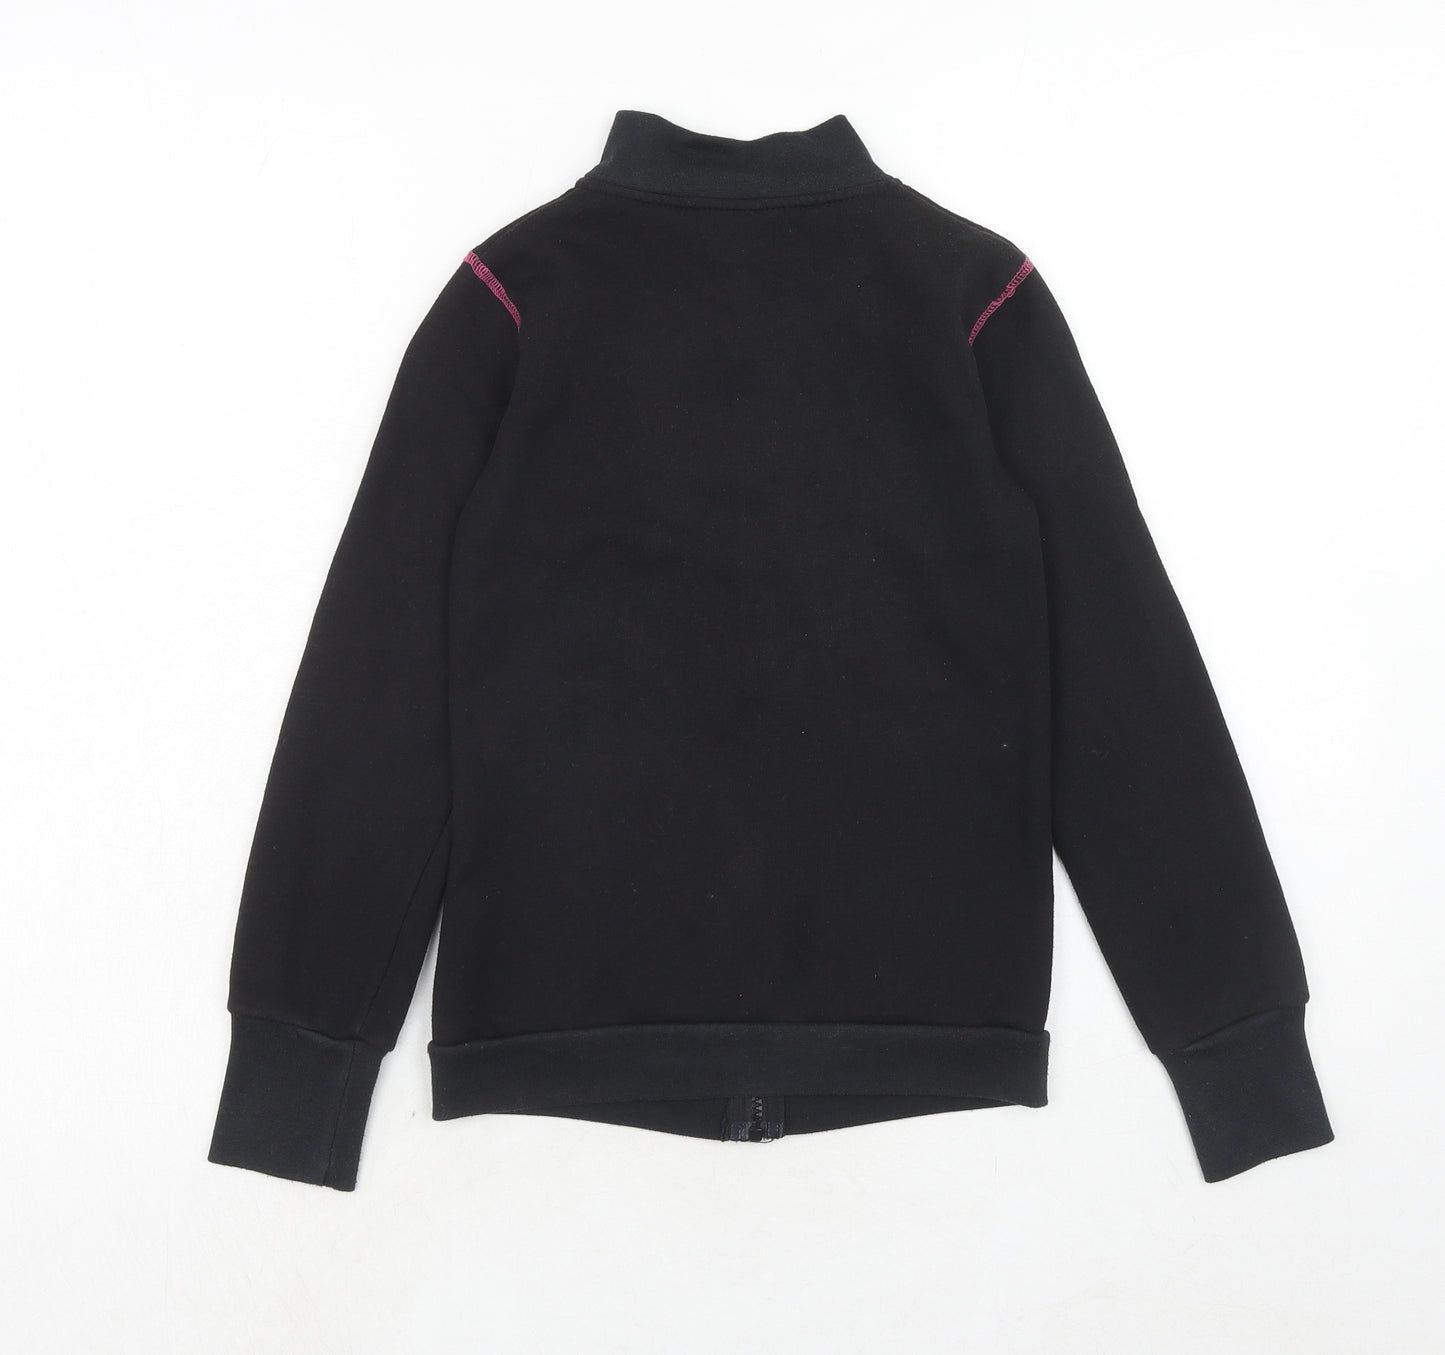 LA Gear Girls Black Cotton Full Zip Sweatshirt Size 7-8 Years Zip